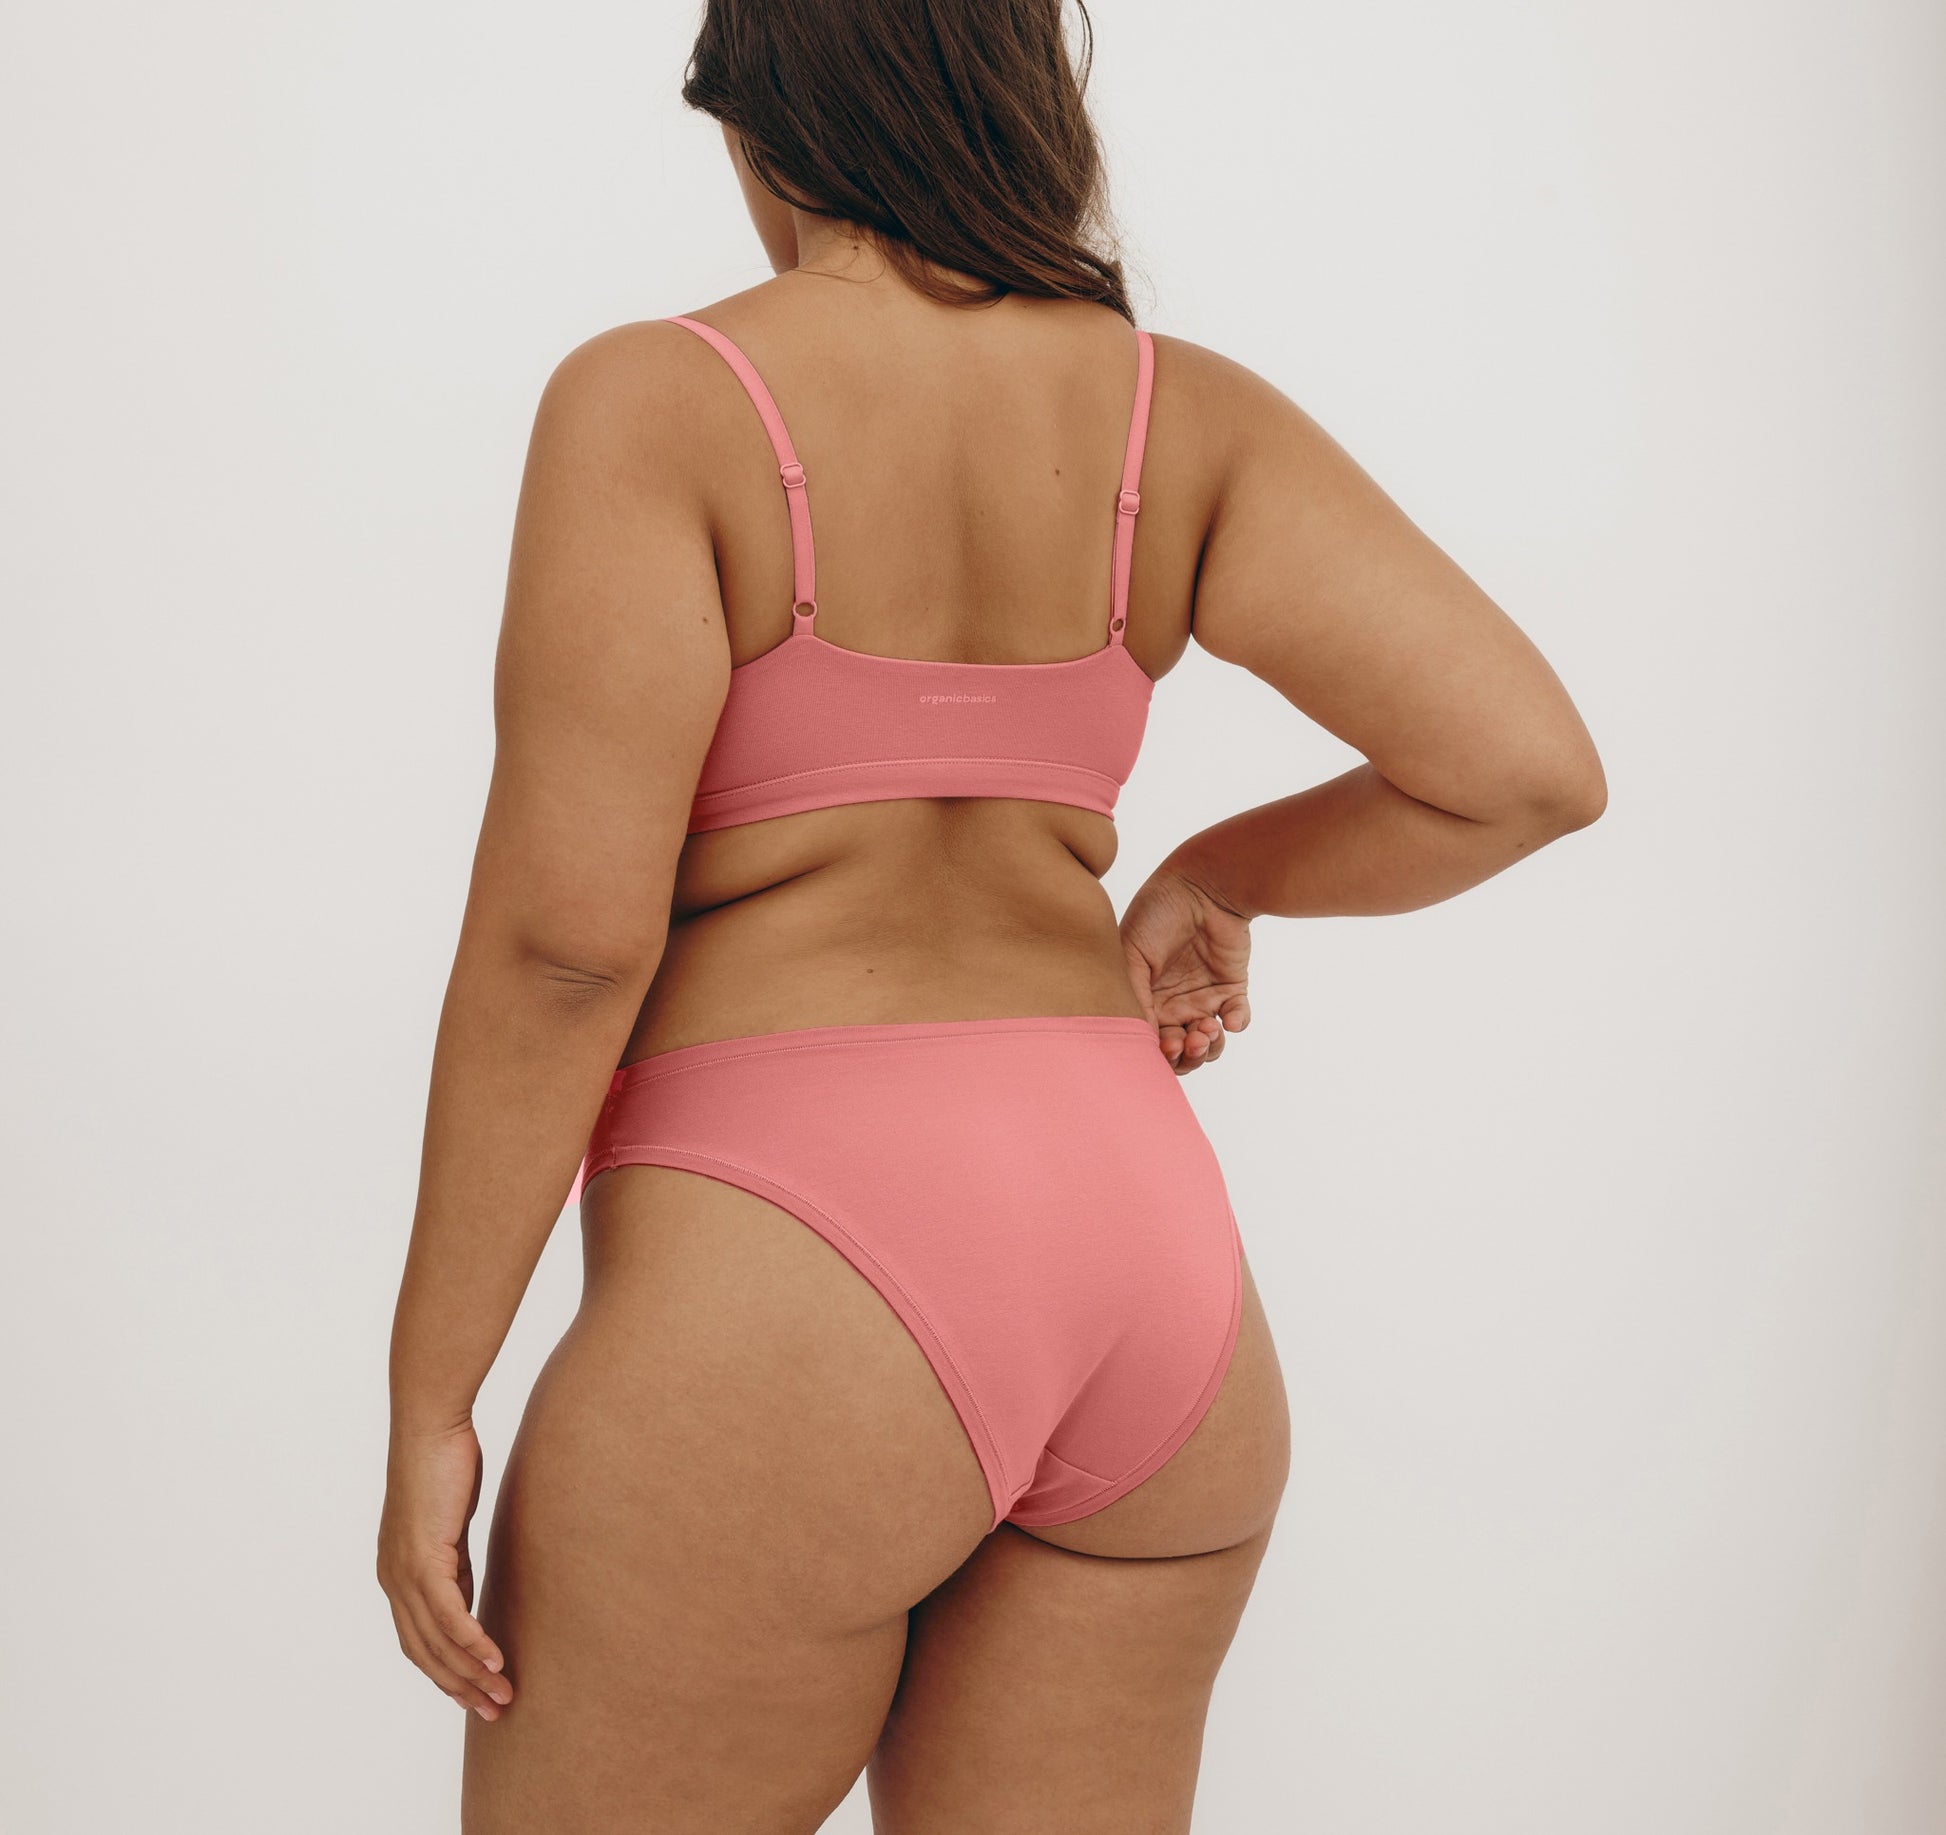 Super Pink Second-Skin Bikini Panty